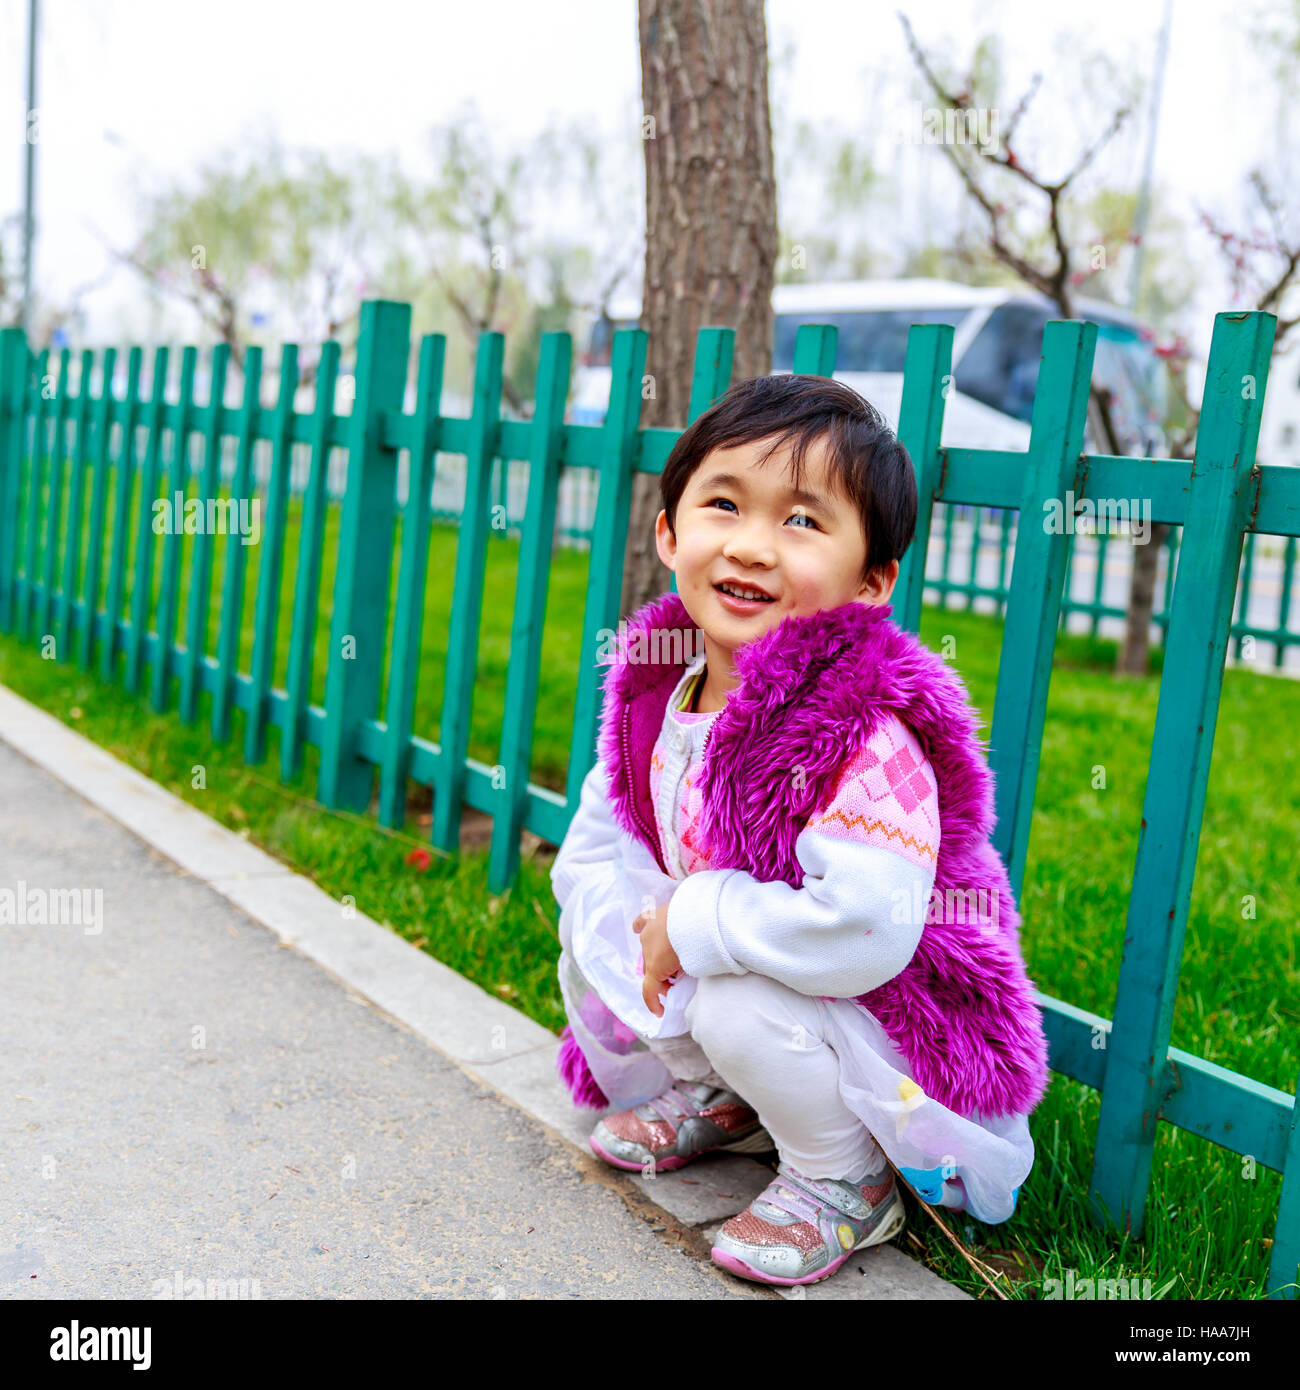 Adorable girl enjoys play time on the street, smiling. Stock Photo